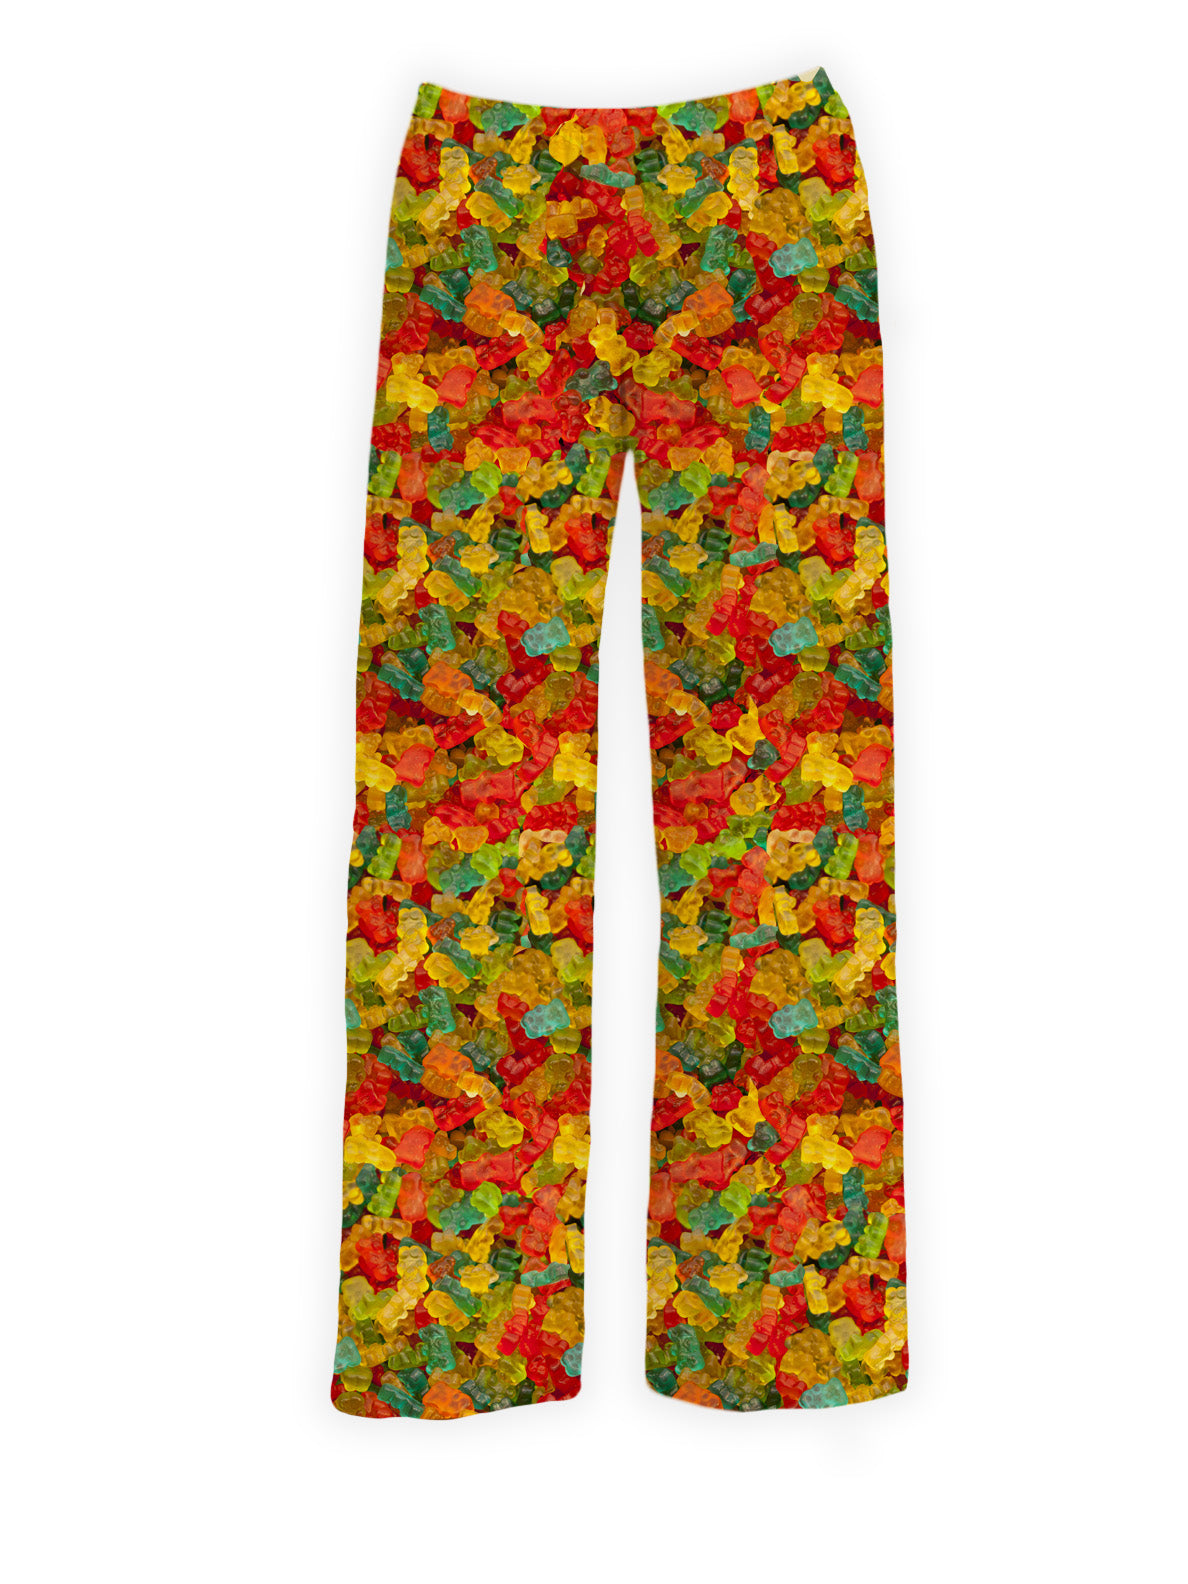 BRIEF INSANITY's Gummy Bear Pajama Lounge Pants